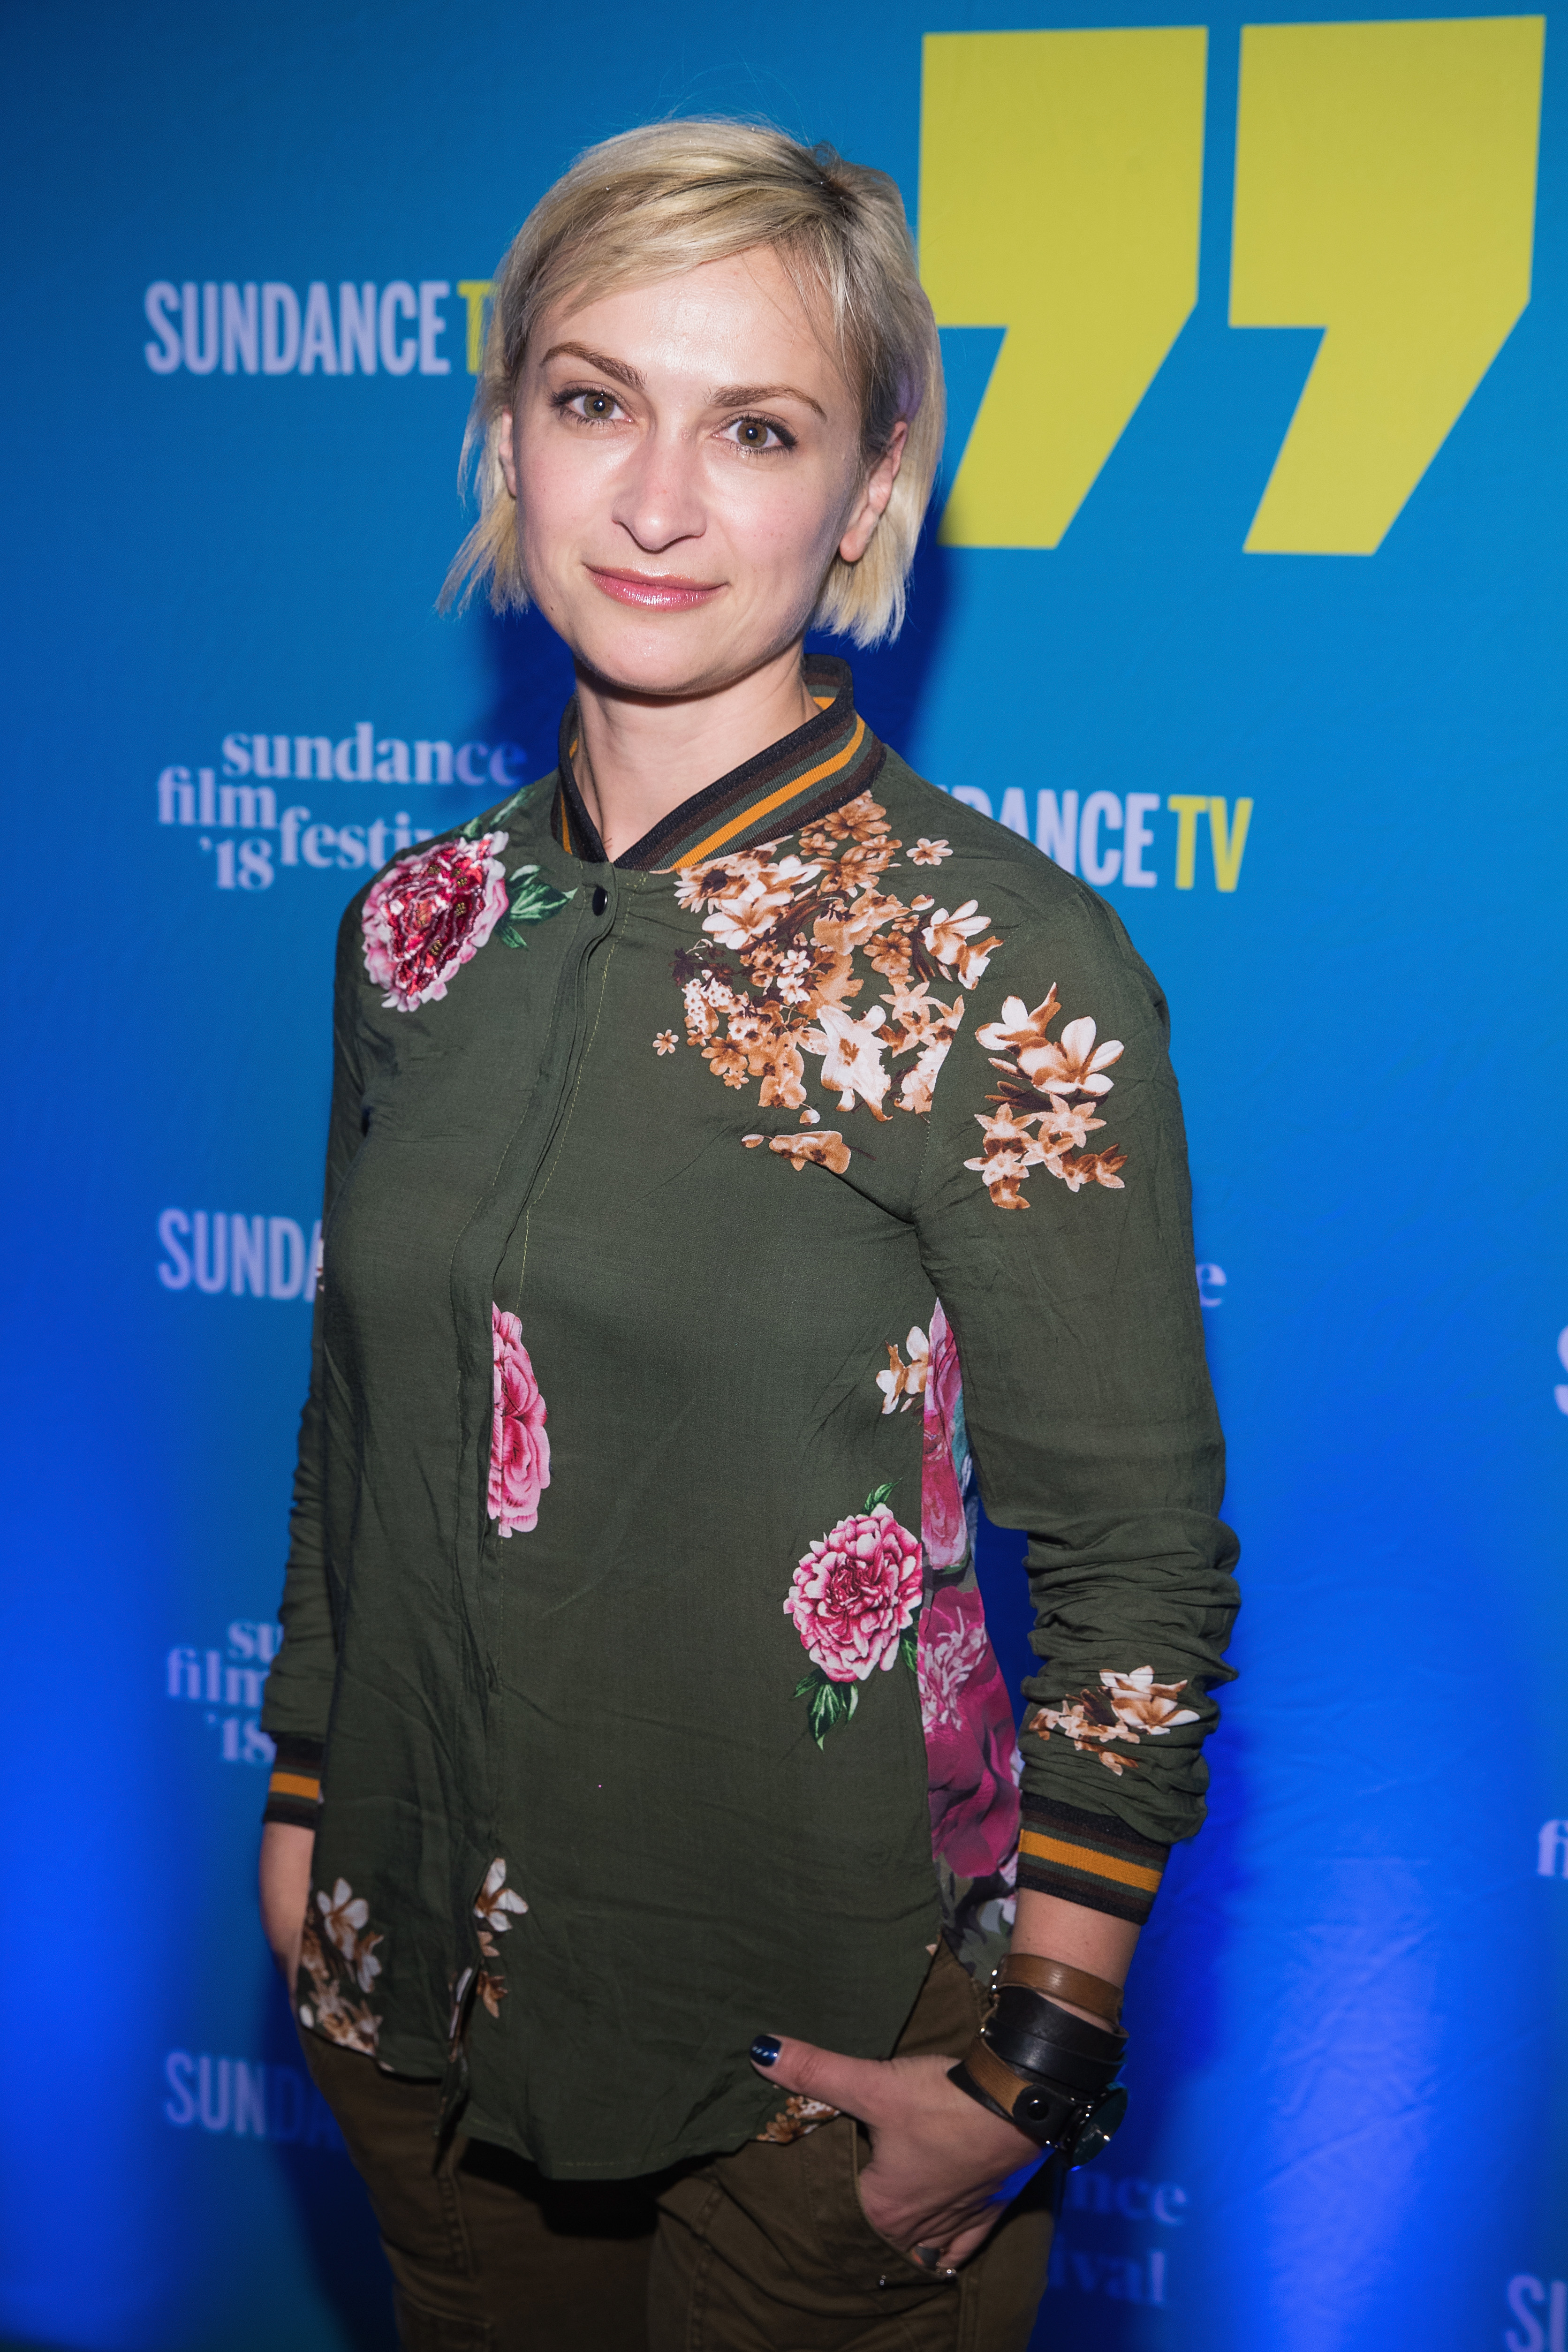 Filmmaker Halyna Hutchins attends the 2018 Sundance Film Festival in 2018 in Park City, Utah.